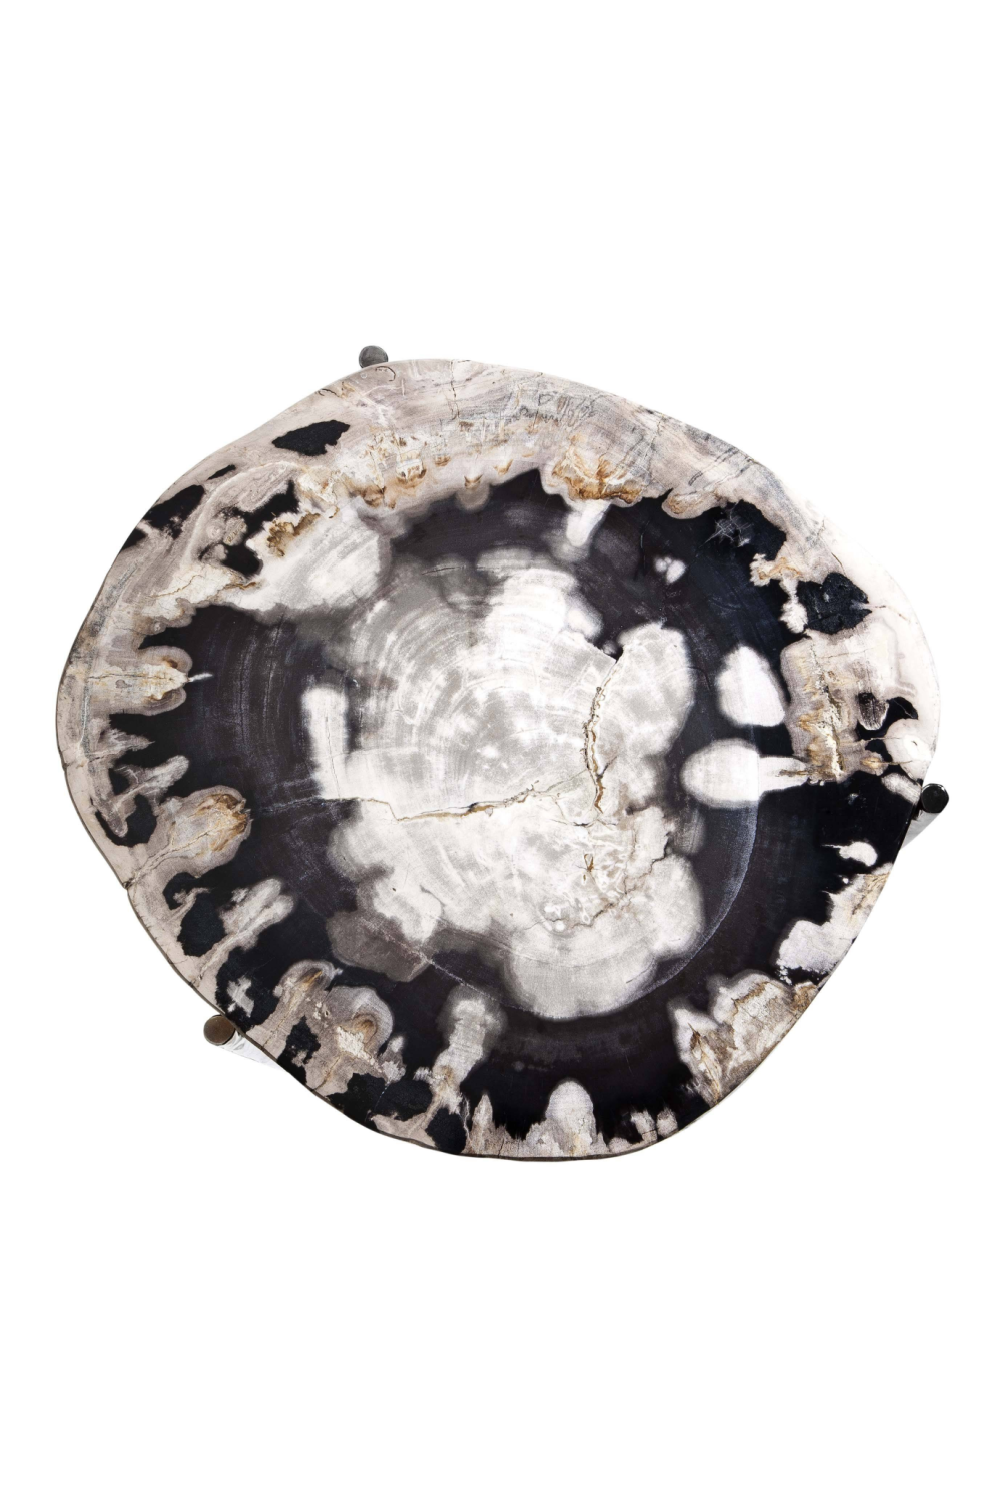 Petrified Wood Side Table | Eichholtz | OROA